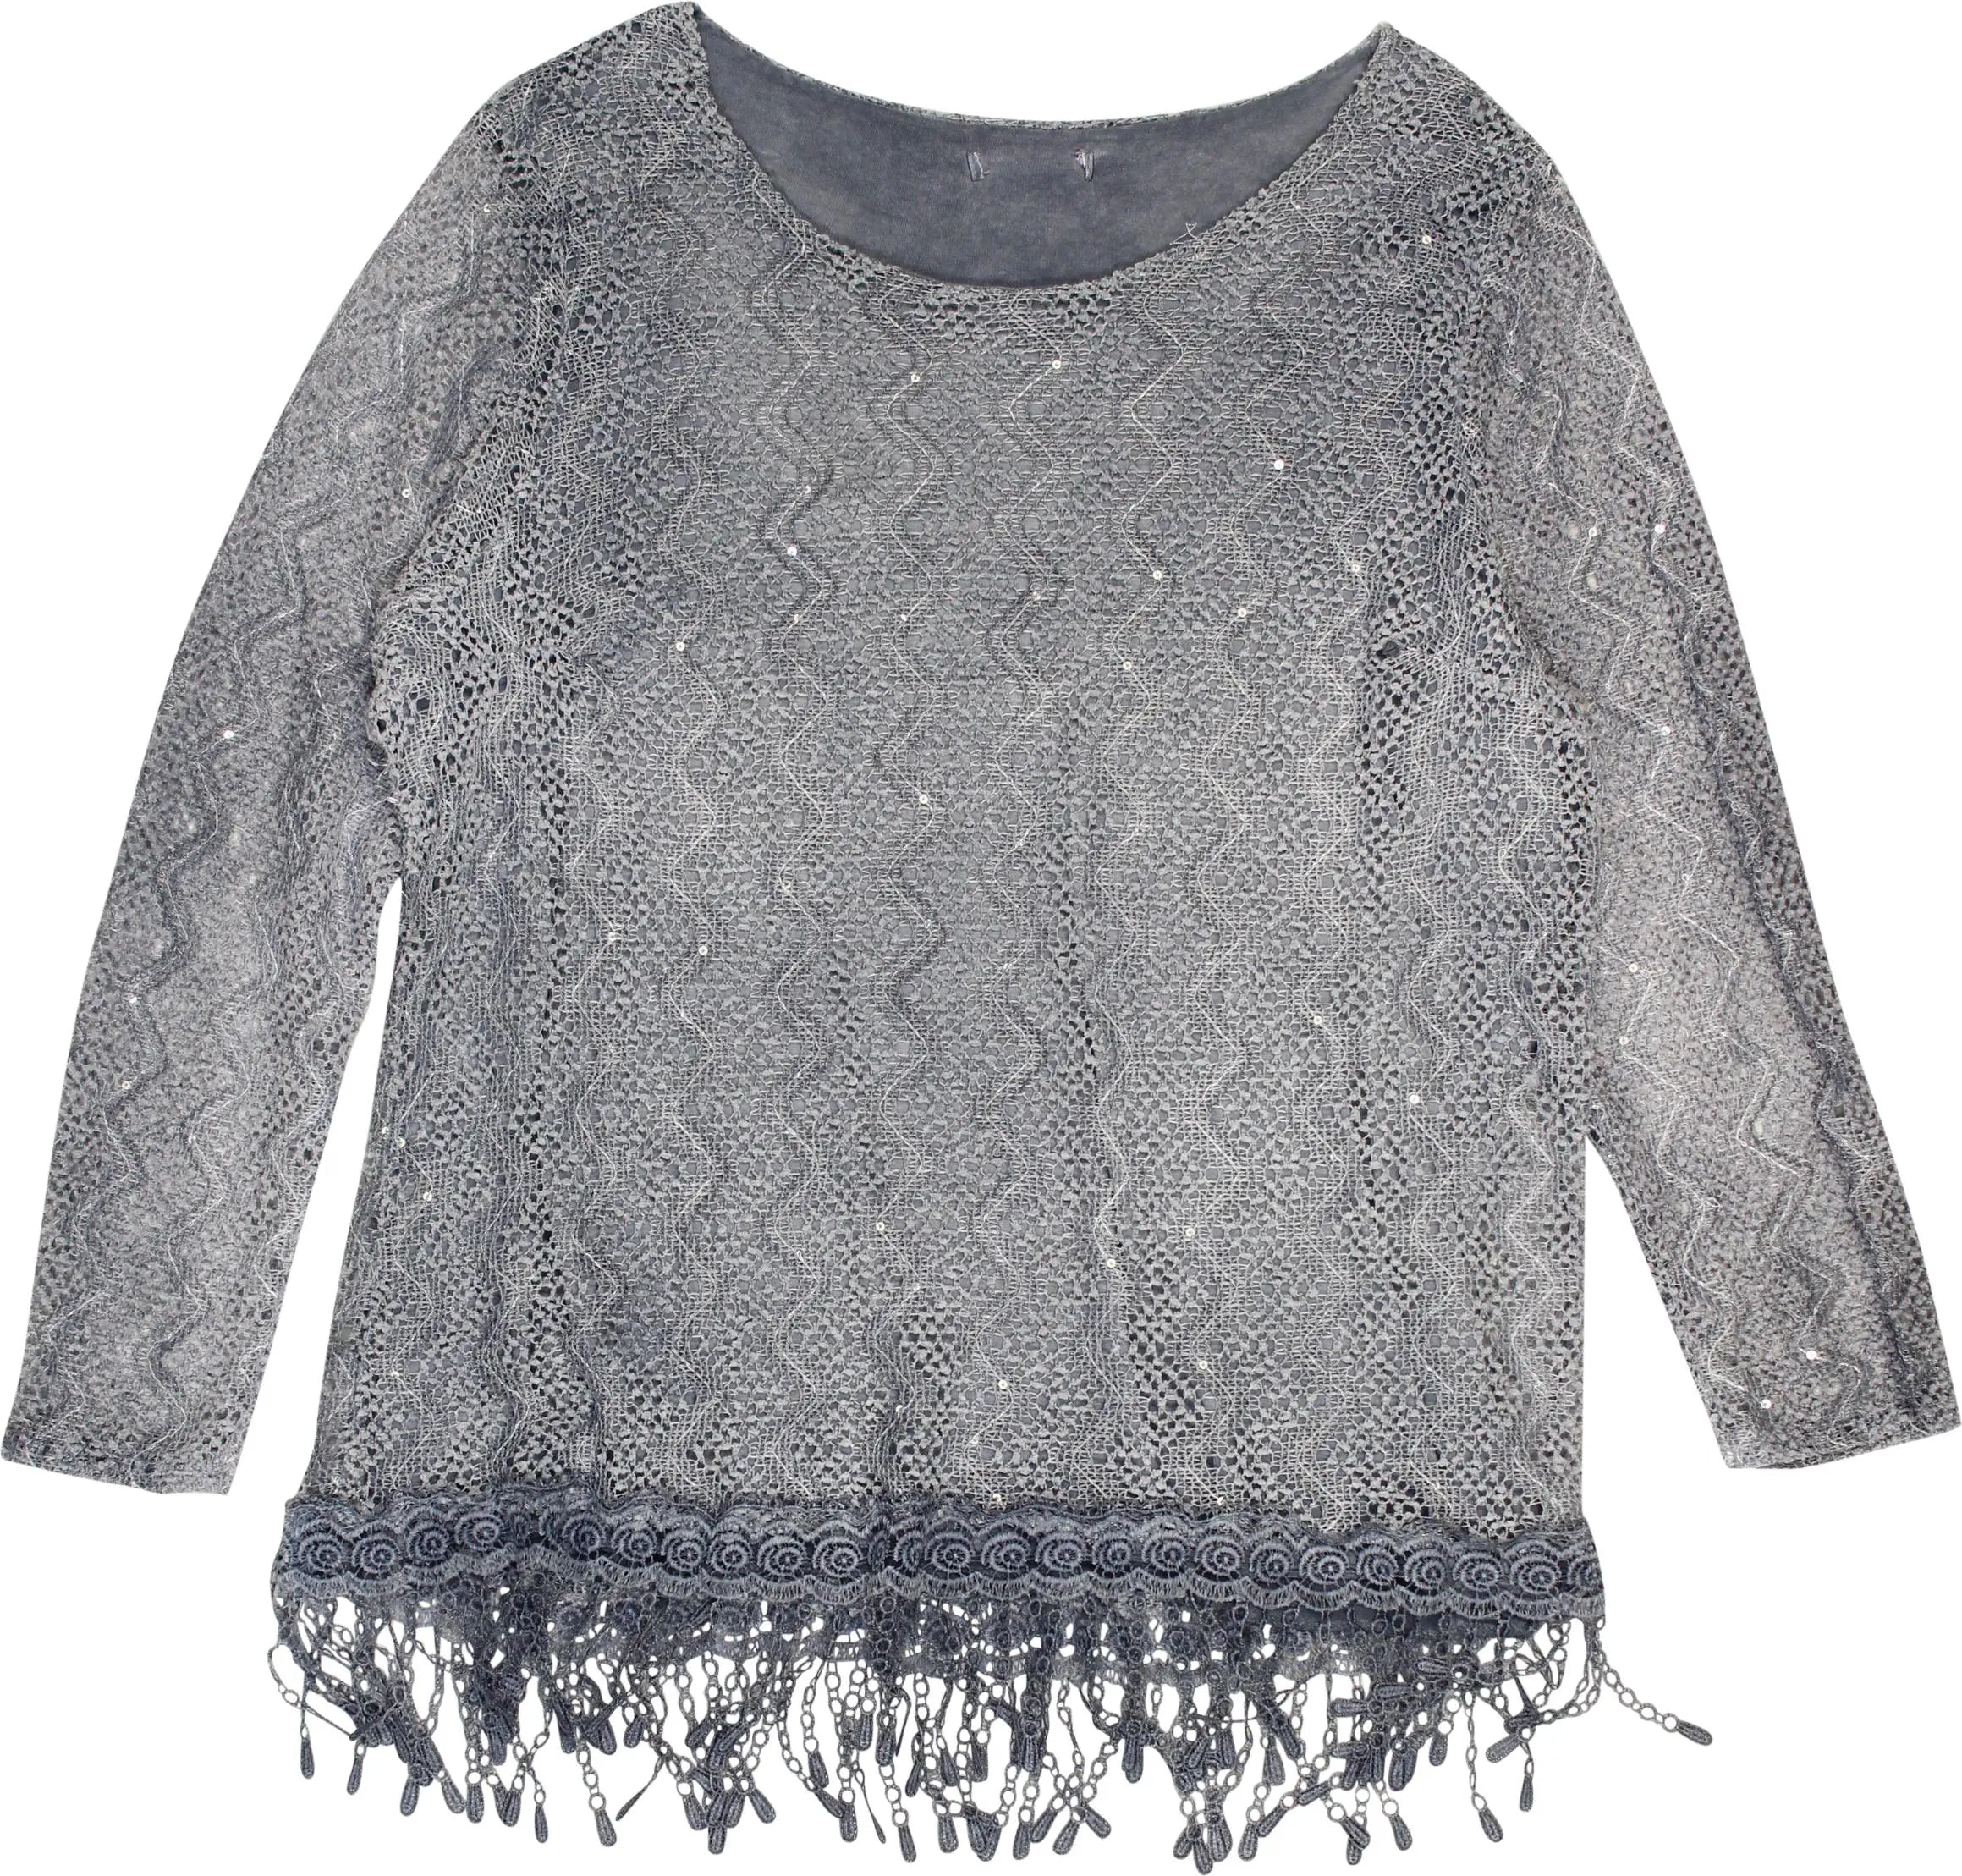 Miss Etam - Long Sleeve Crochet Top- ThriftTale.com - Vintage and second handclothing